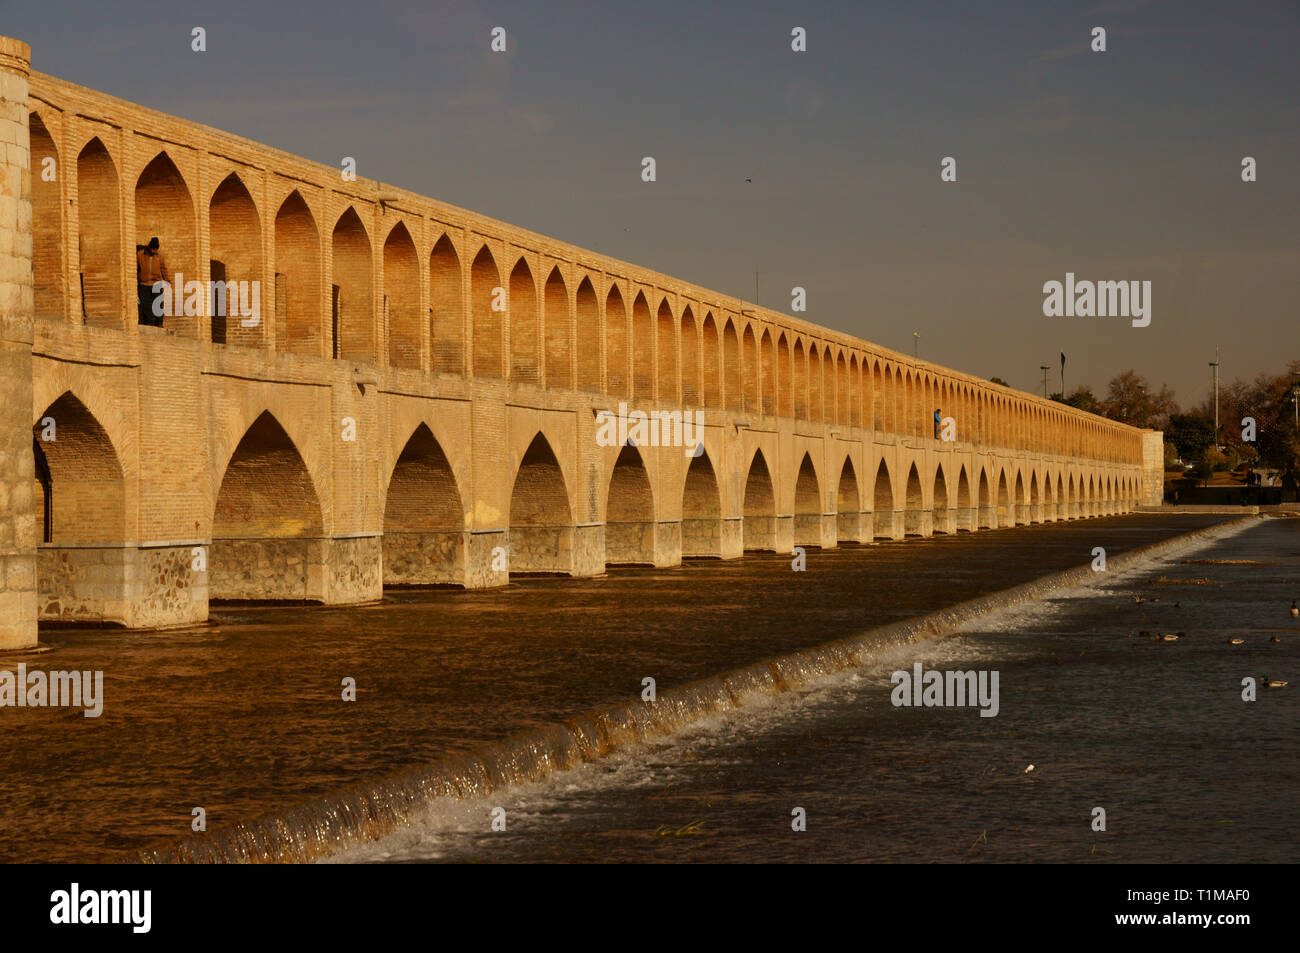 Arch of Allahverdi Khan Bridge, Si-o-seh pol, Bridge of thirty-three spans. Isfahan. Iran. Stock Photo